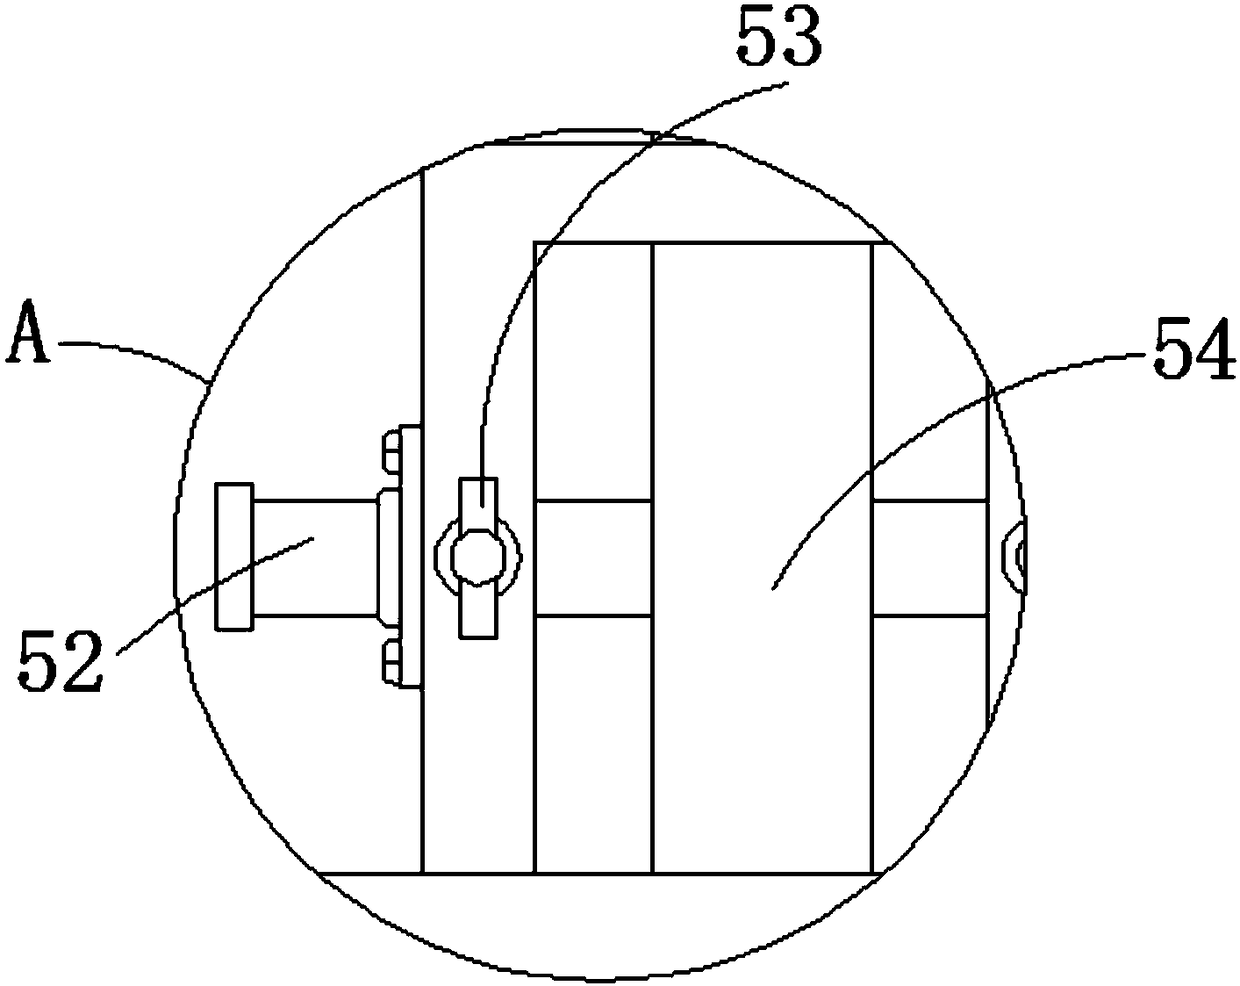 Coupled interlocking ball valve structure